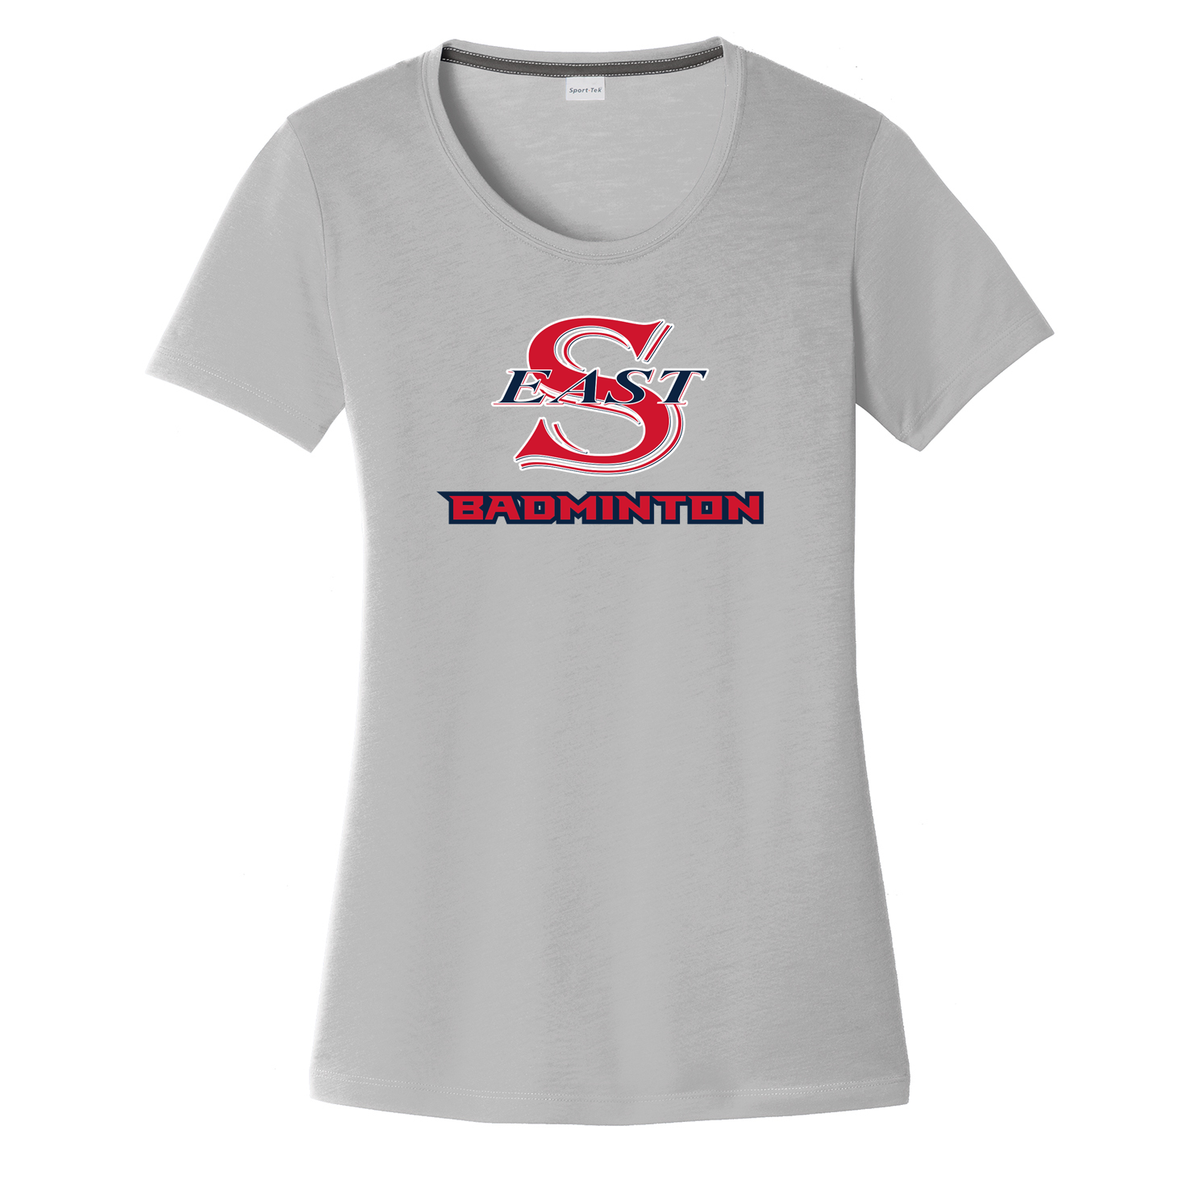 Smithtown East Badminton Women's CottonTouch Performance T-Shirt